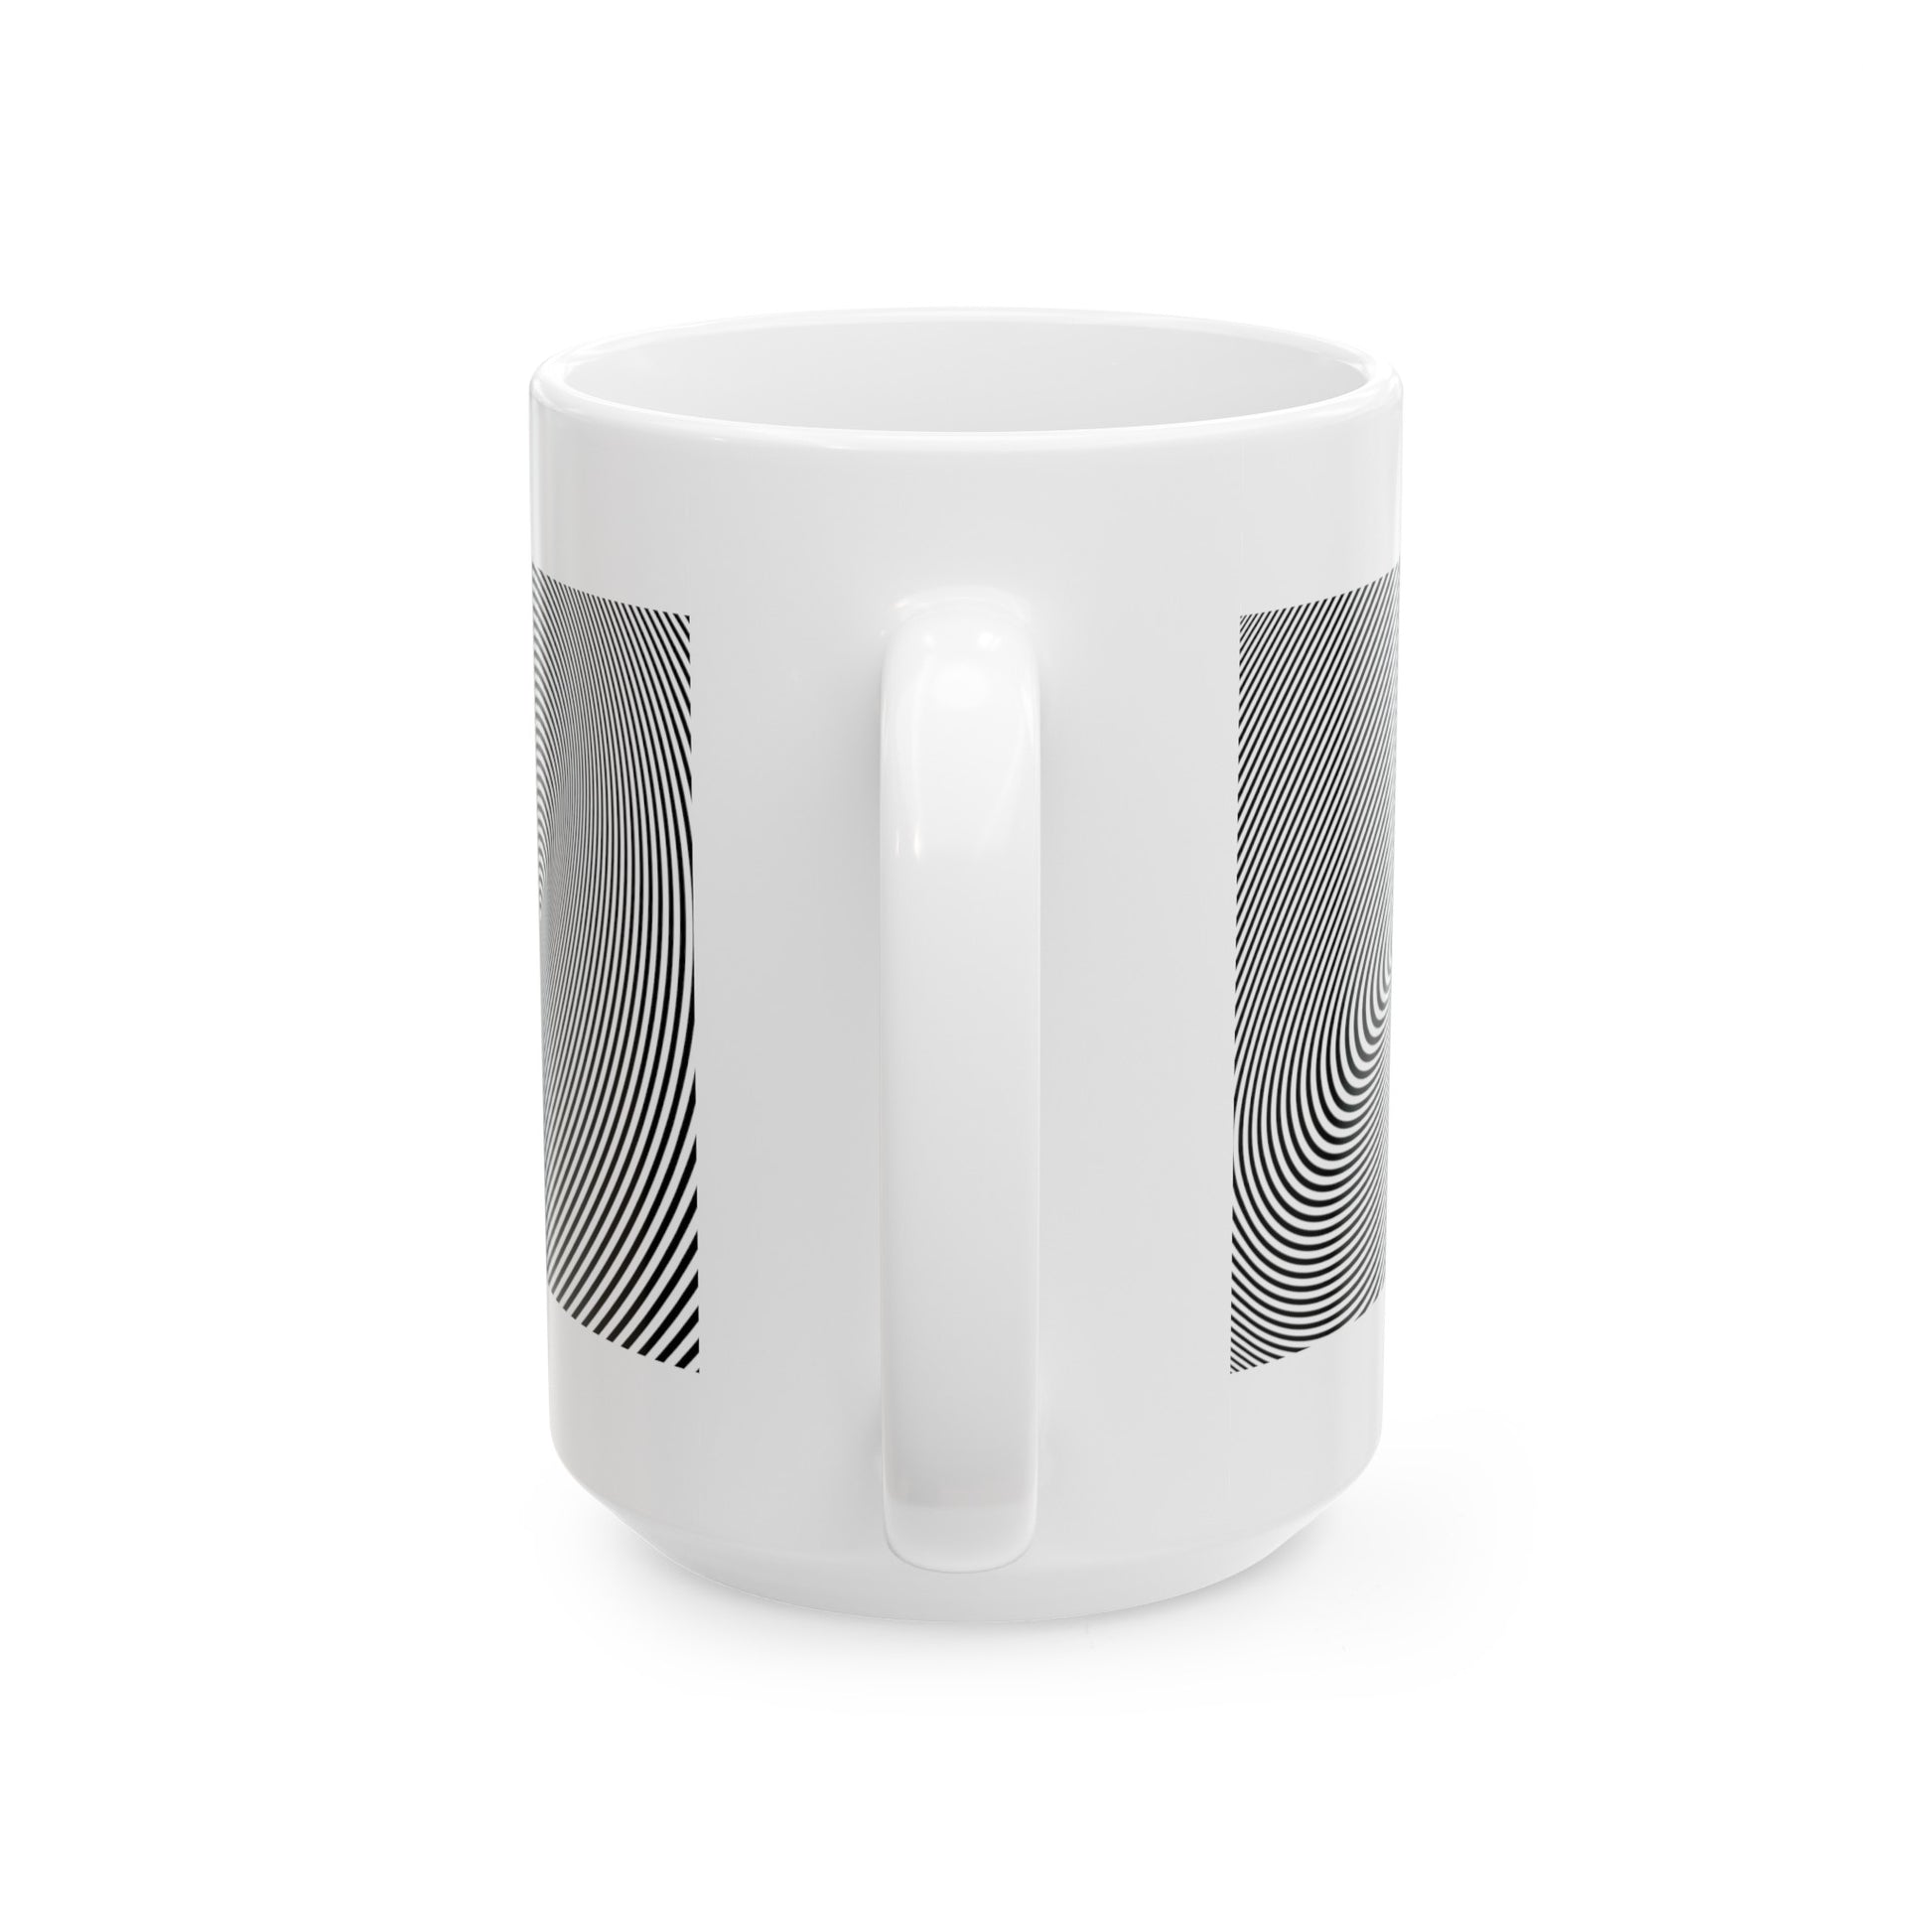 Spiral Illusion Coffee Mug - Double Sided White Ceramic 15oz by TheGlassyLass.com